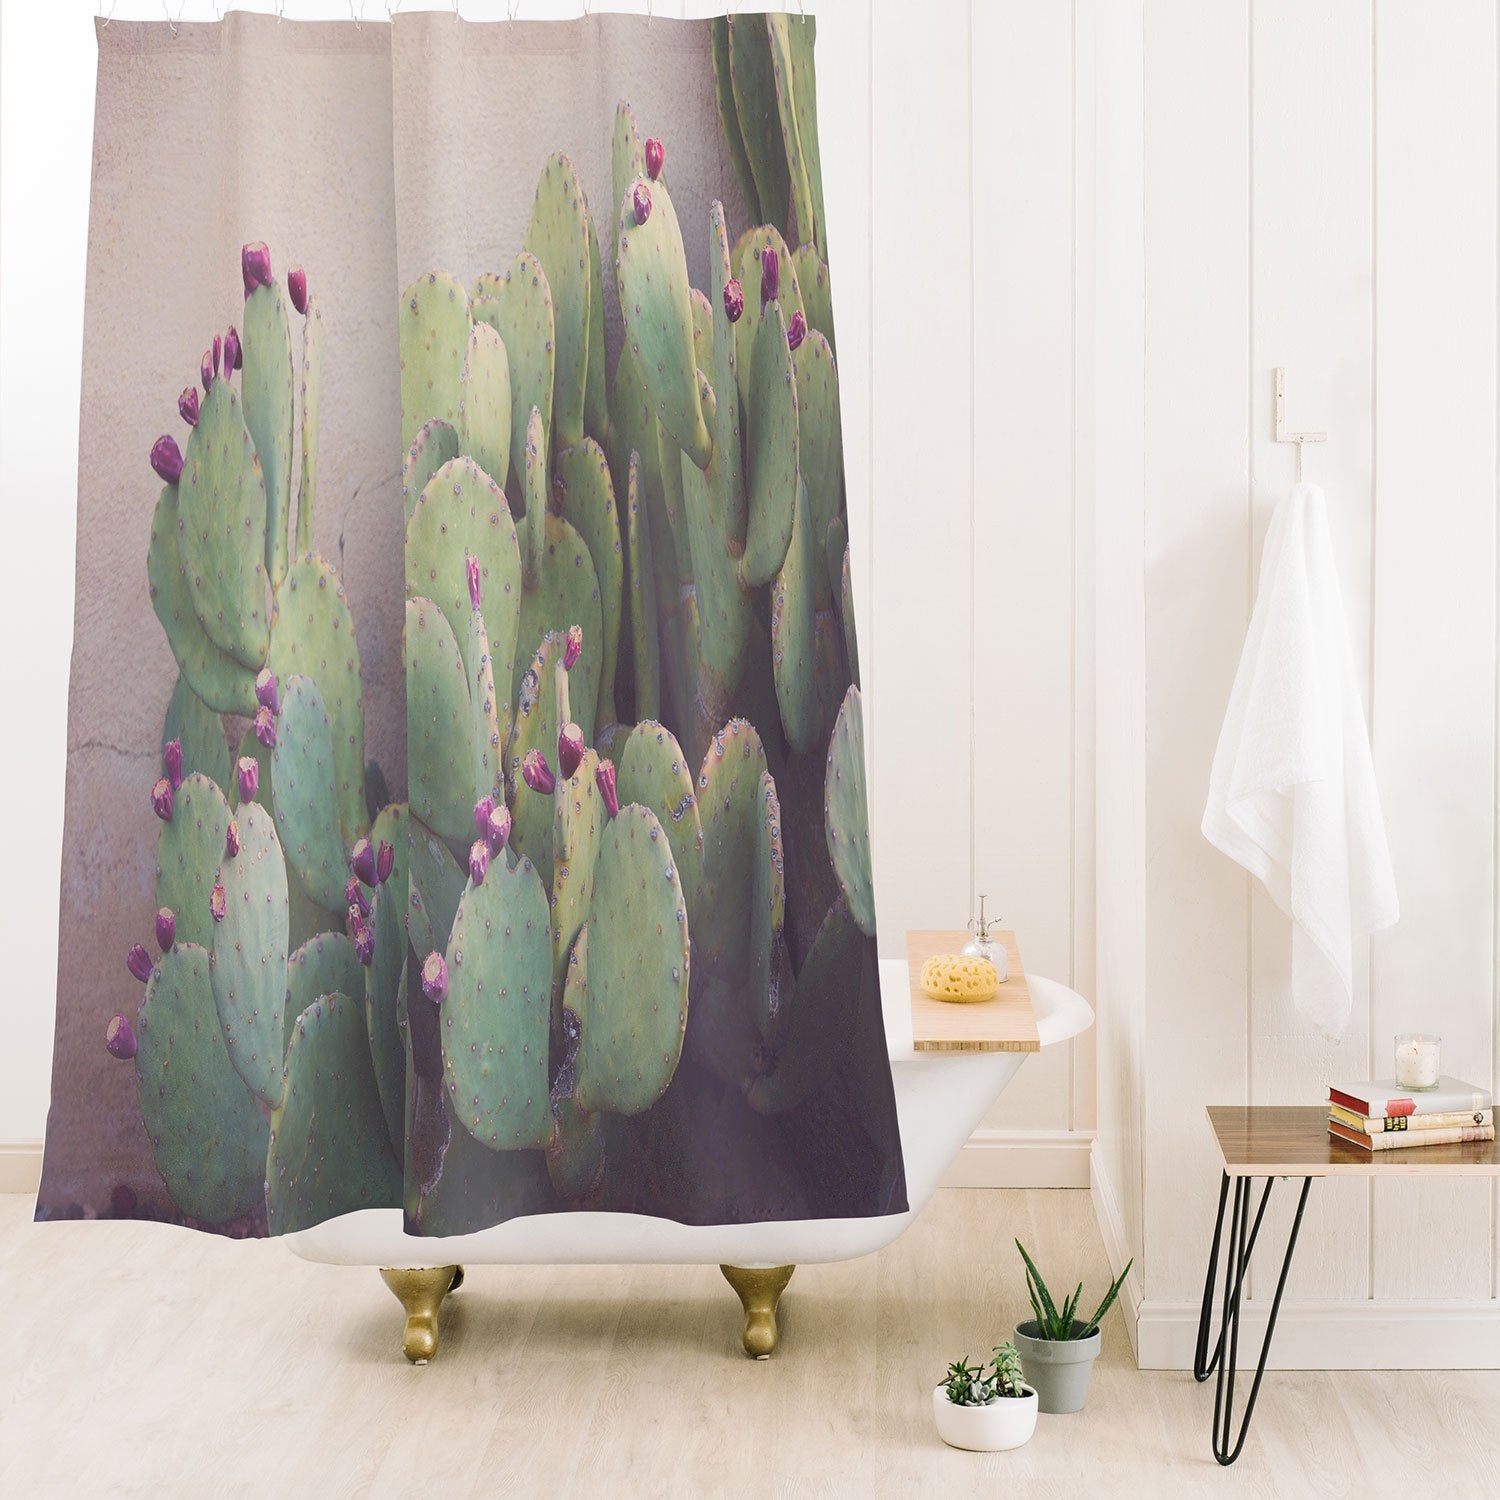 Blooming Cactus Shower Curtain - bathroom, cactus, curtain, decor, desert, home, ranch, rodeo, shower, southwestern, western, westernhomedecor, westernshowercurtain - still life in marfa - Baha Ranch Western Wear